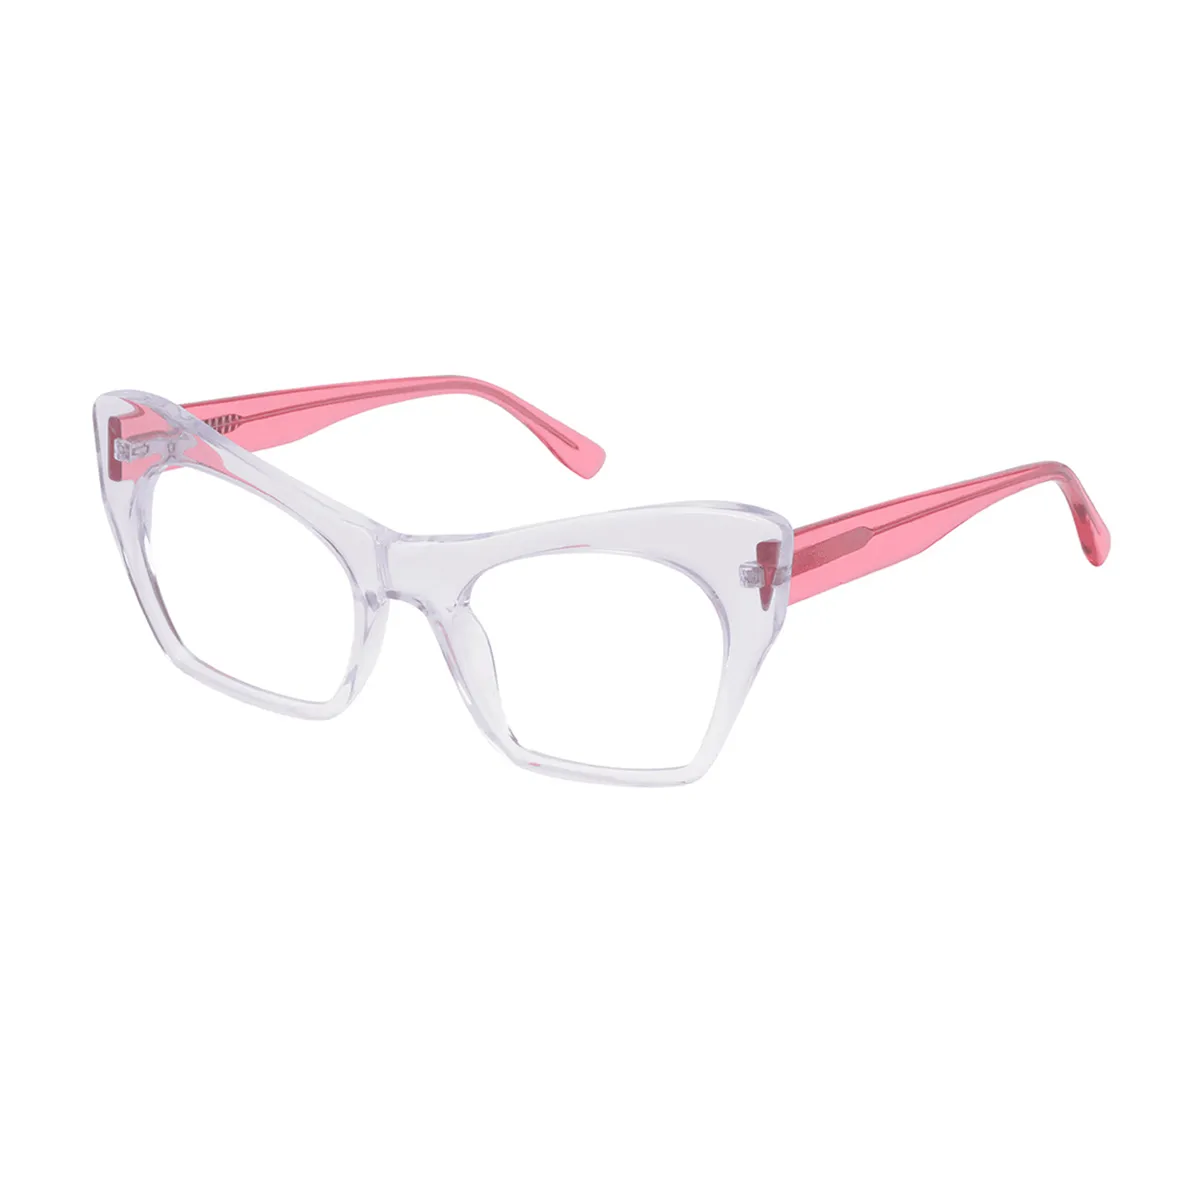 Jocelyn - Cat-eye Pink Glasses for Women